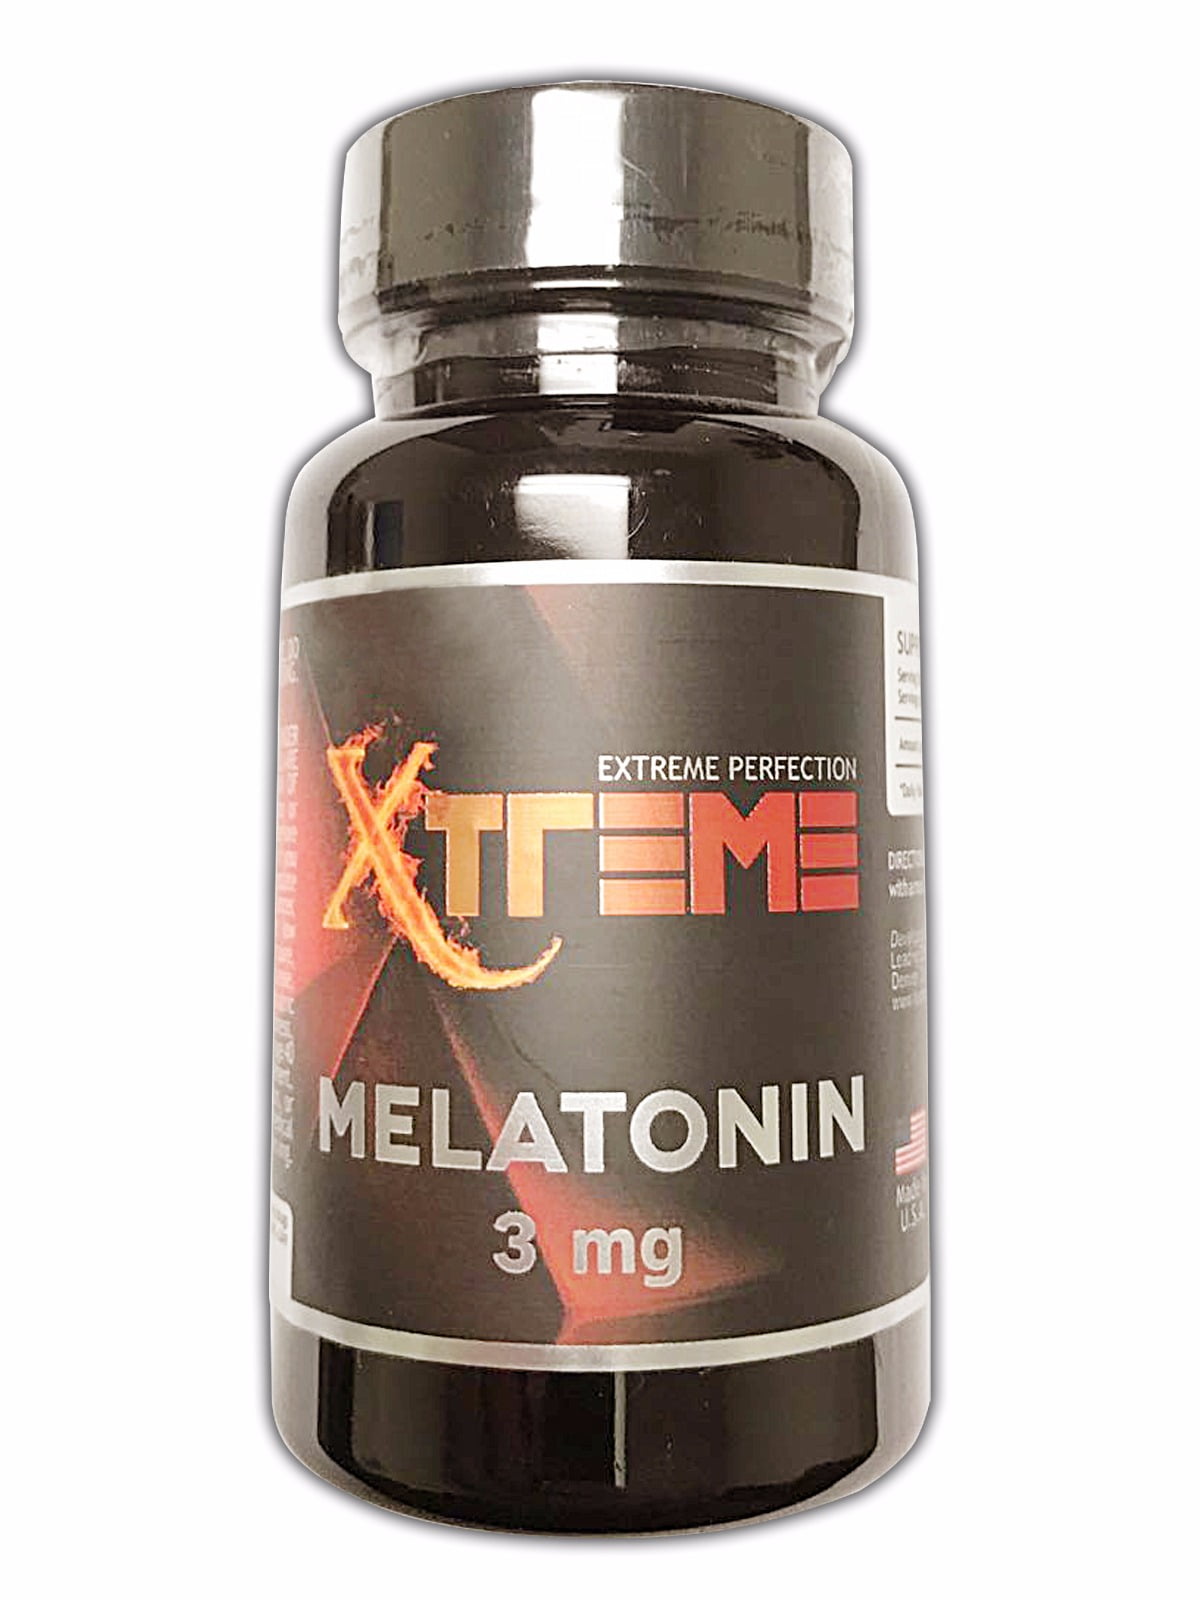 MELATONIN 3mg Optimum STRESS RELIEF & SLEEP AID 100 Tablets 3 mg - Made